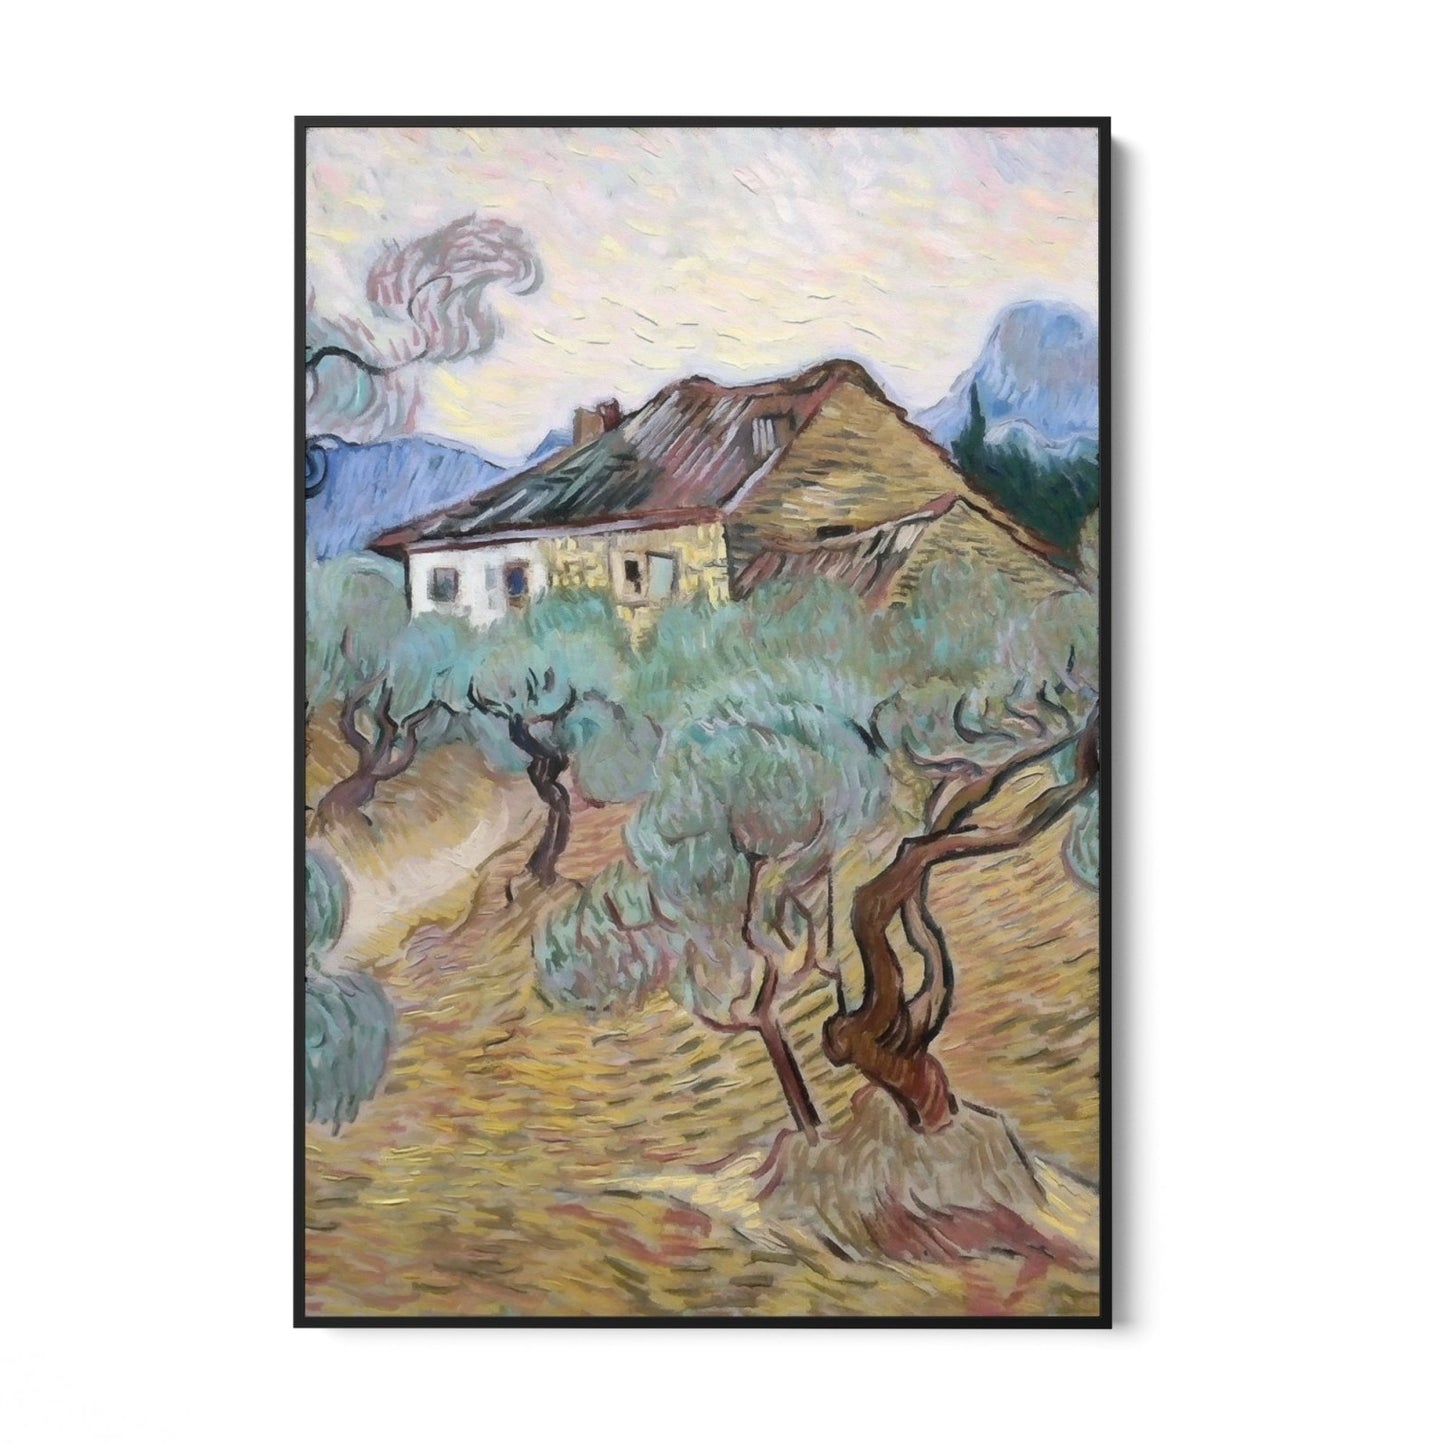 Biała chata wśród drzew oliwnych, Vincent Van Gogh